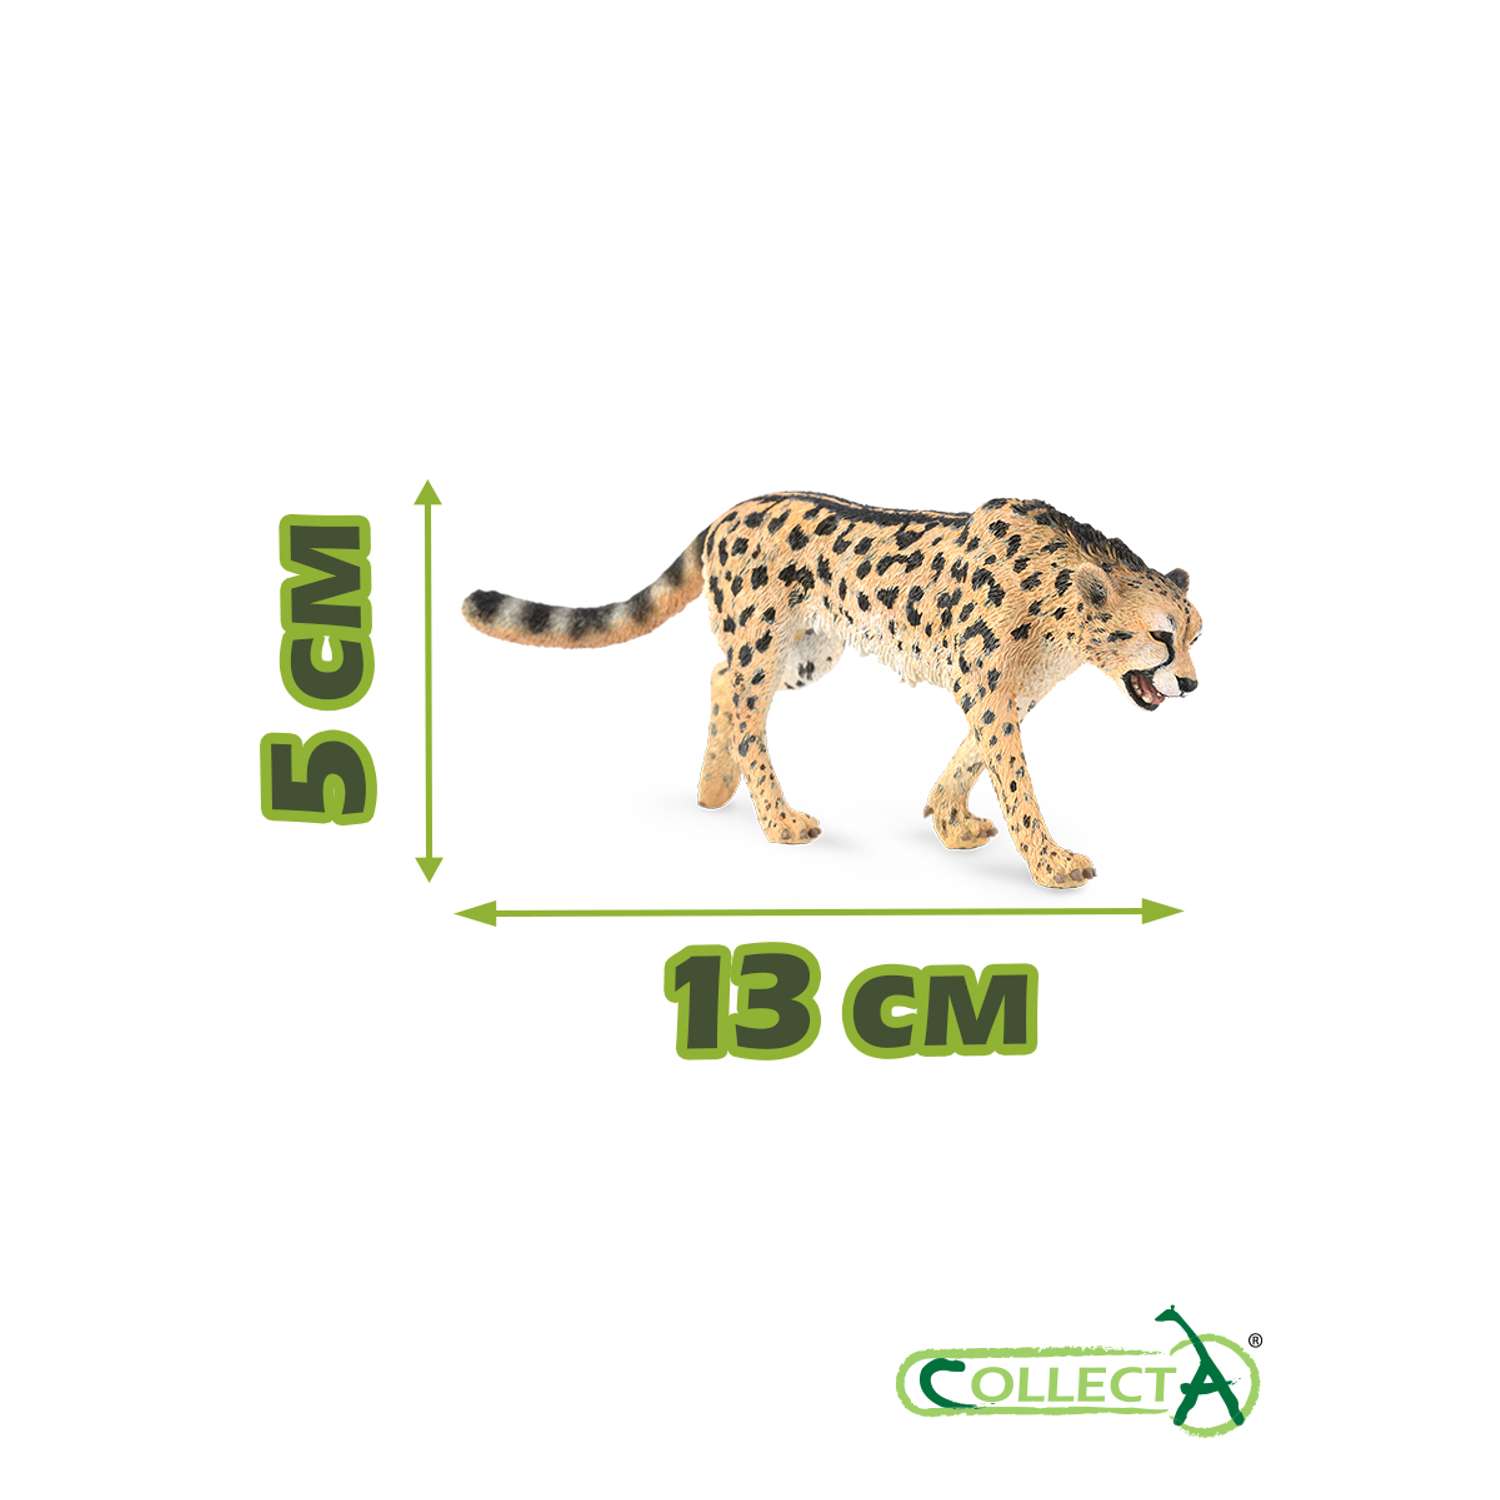 Игрушка Collecta Королевский гепард фигурка животного - фото 2